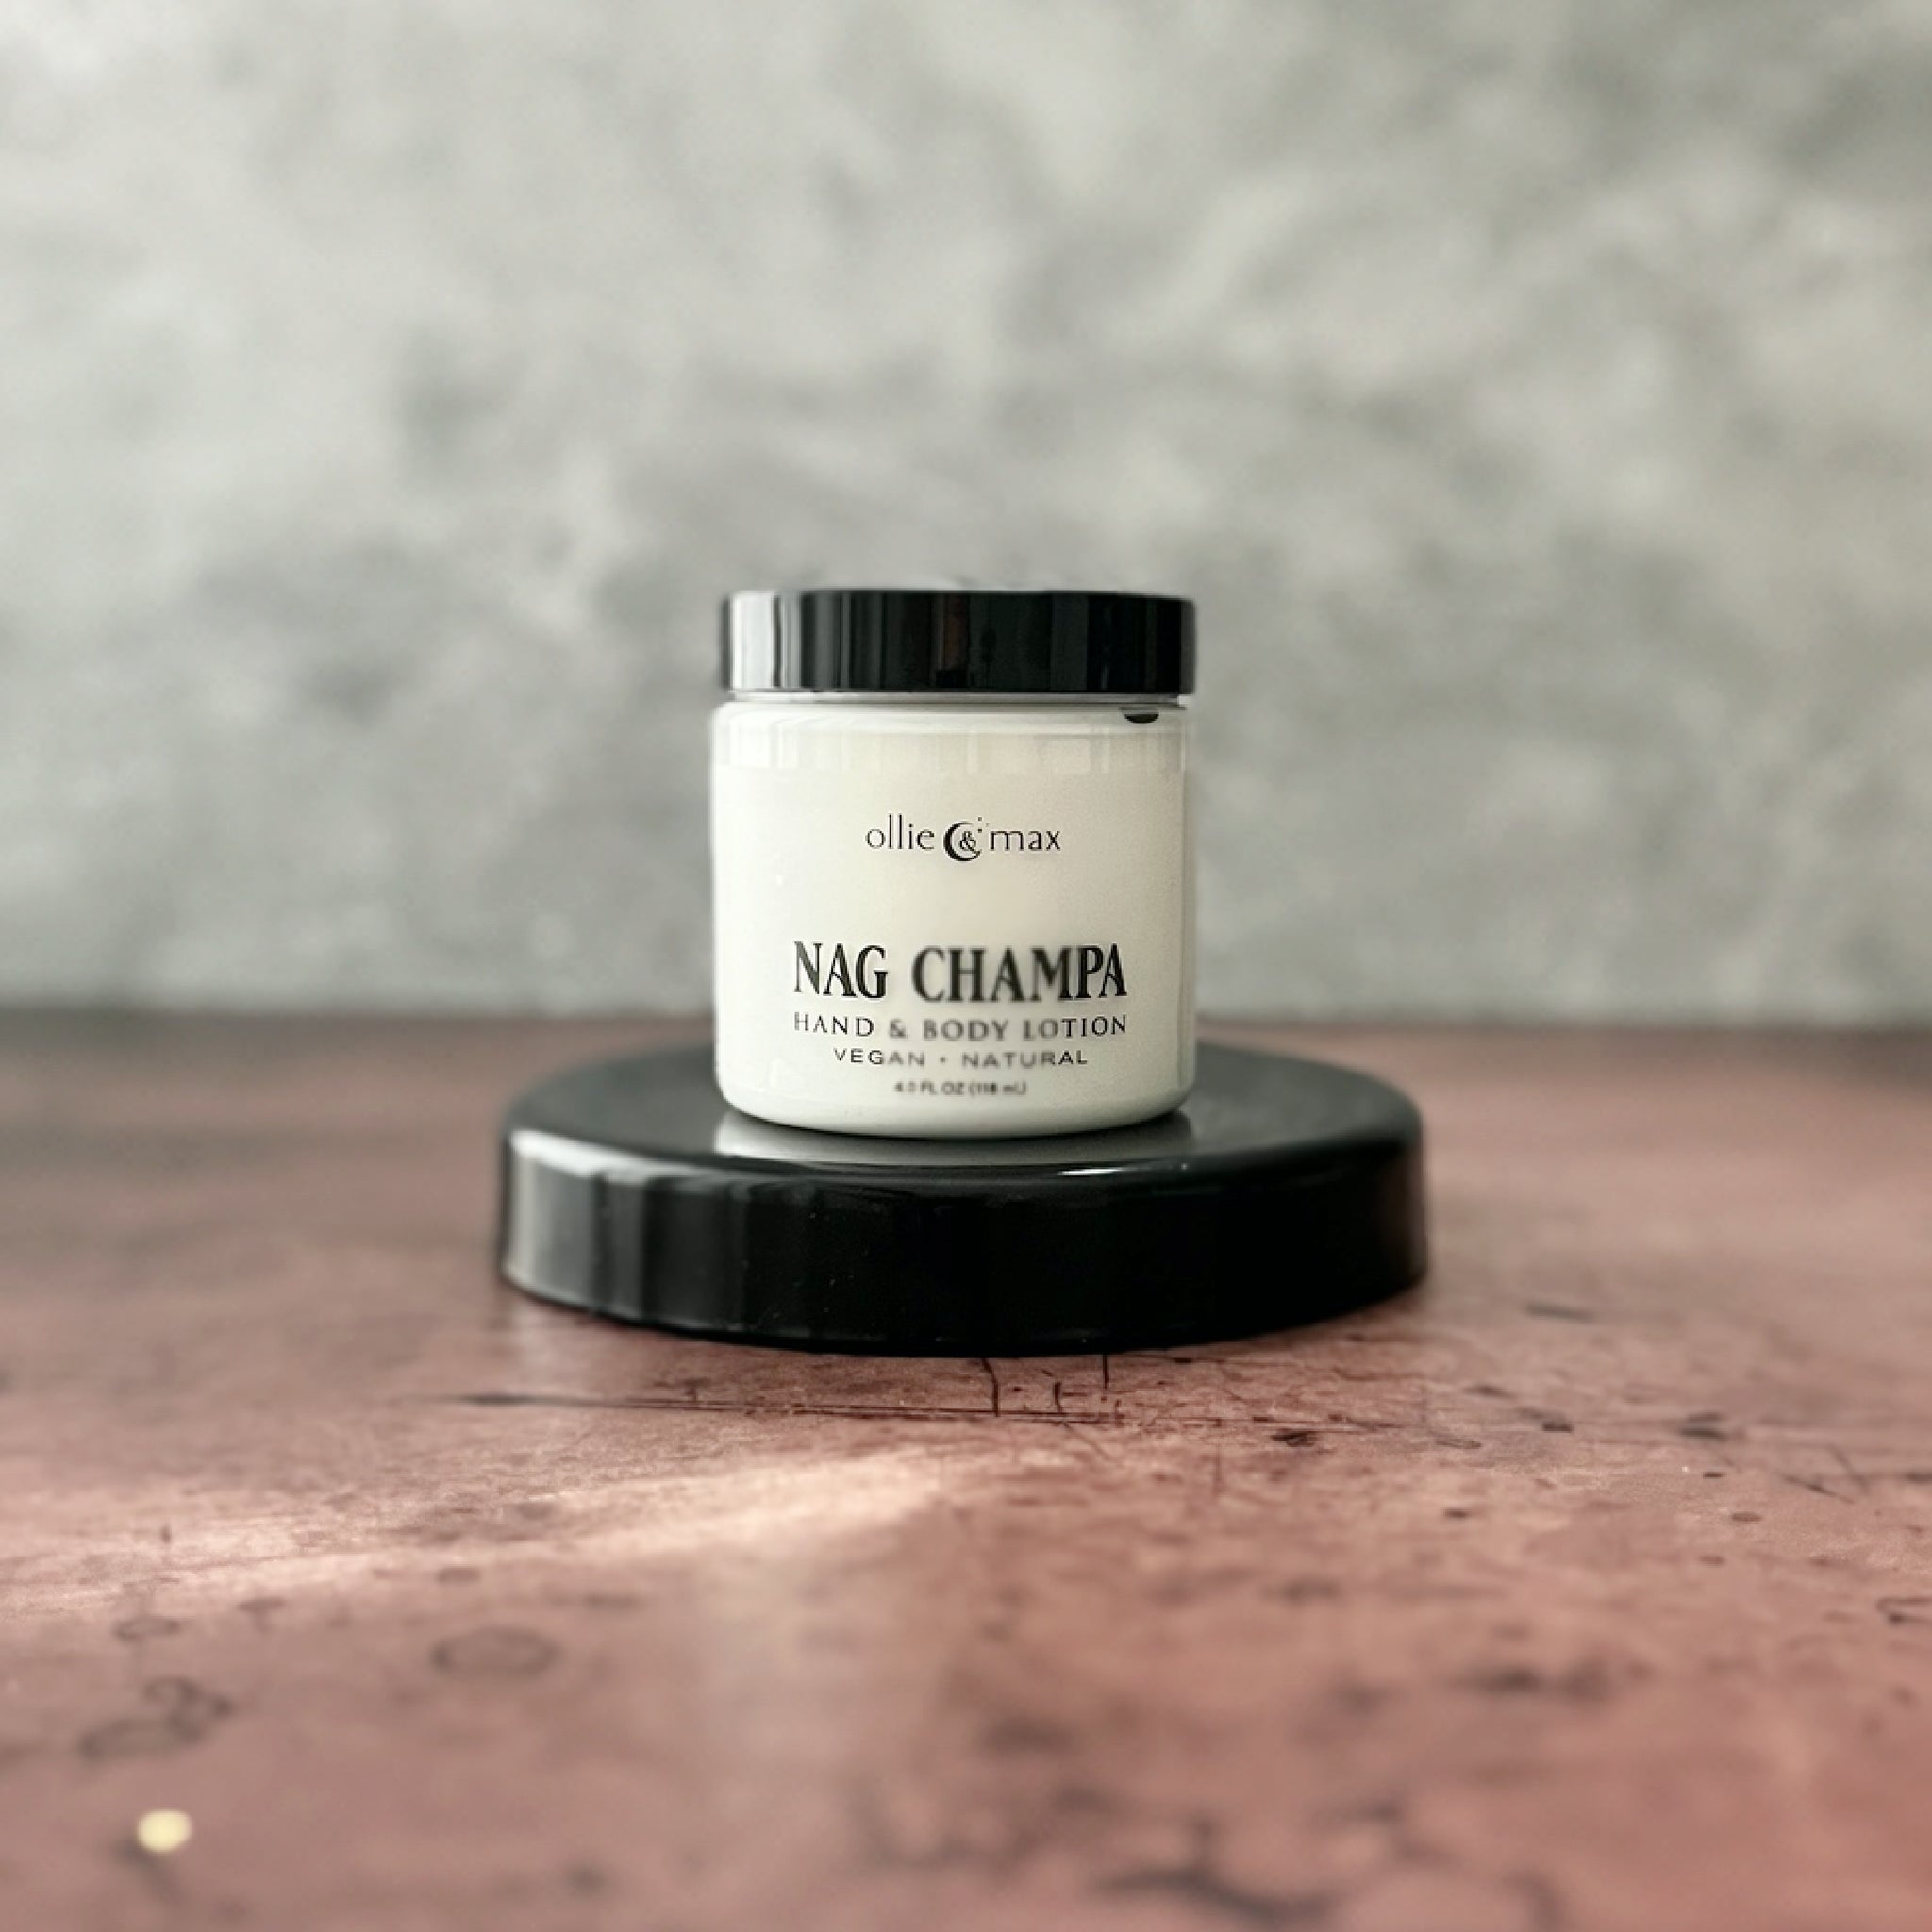 Nag Champa Essential oil - 100% Pure Aromatherapy Grade Essential